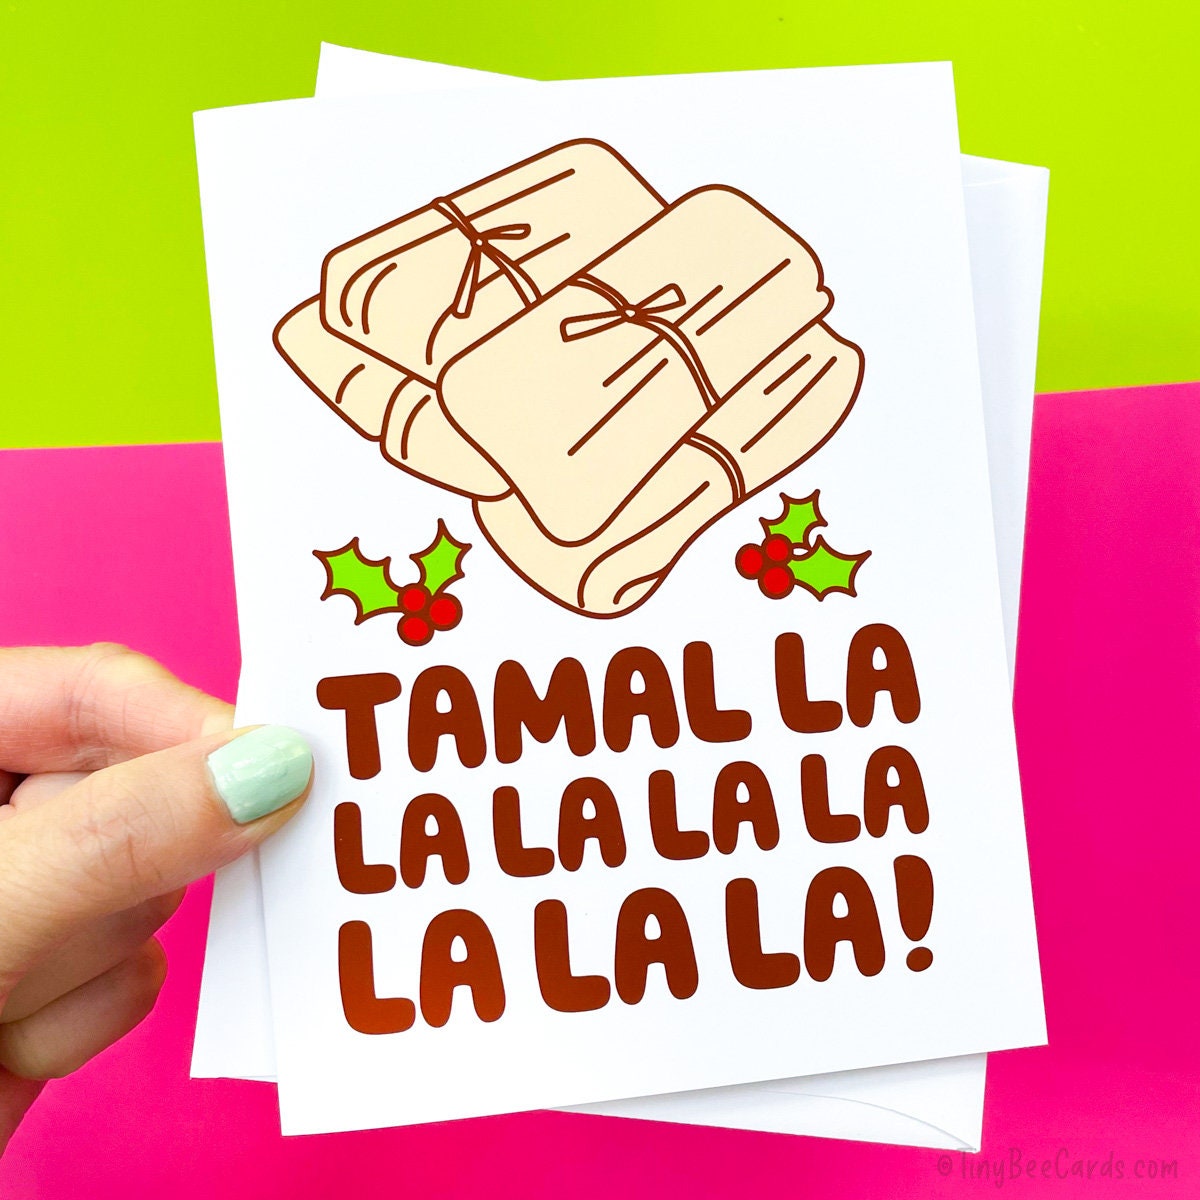 Tamales Christmas Card - Funny Greeting, Tamal Mexican & South American Food